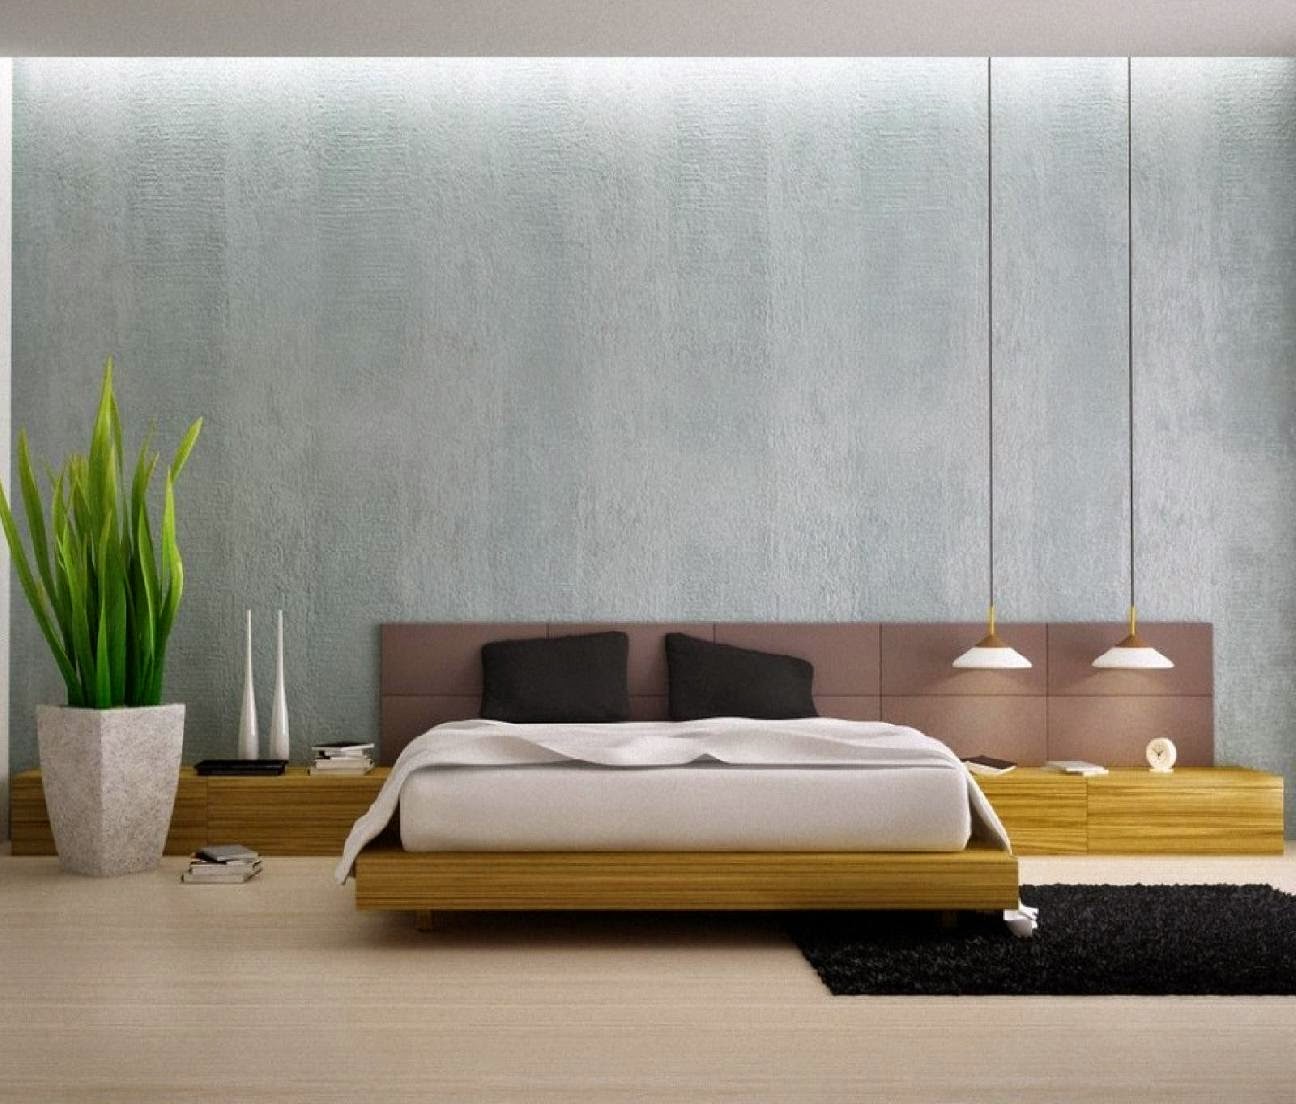 wallpaper rumah,bedroom,furniture,bed,bed frame,wall